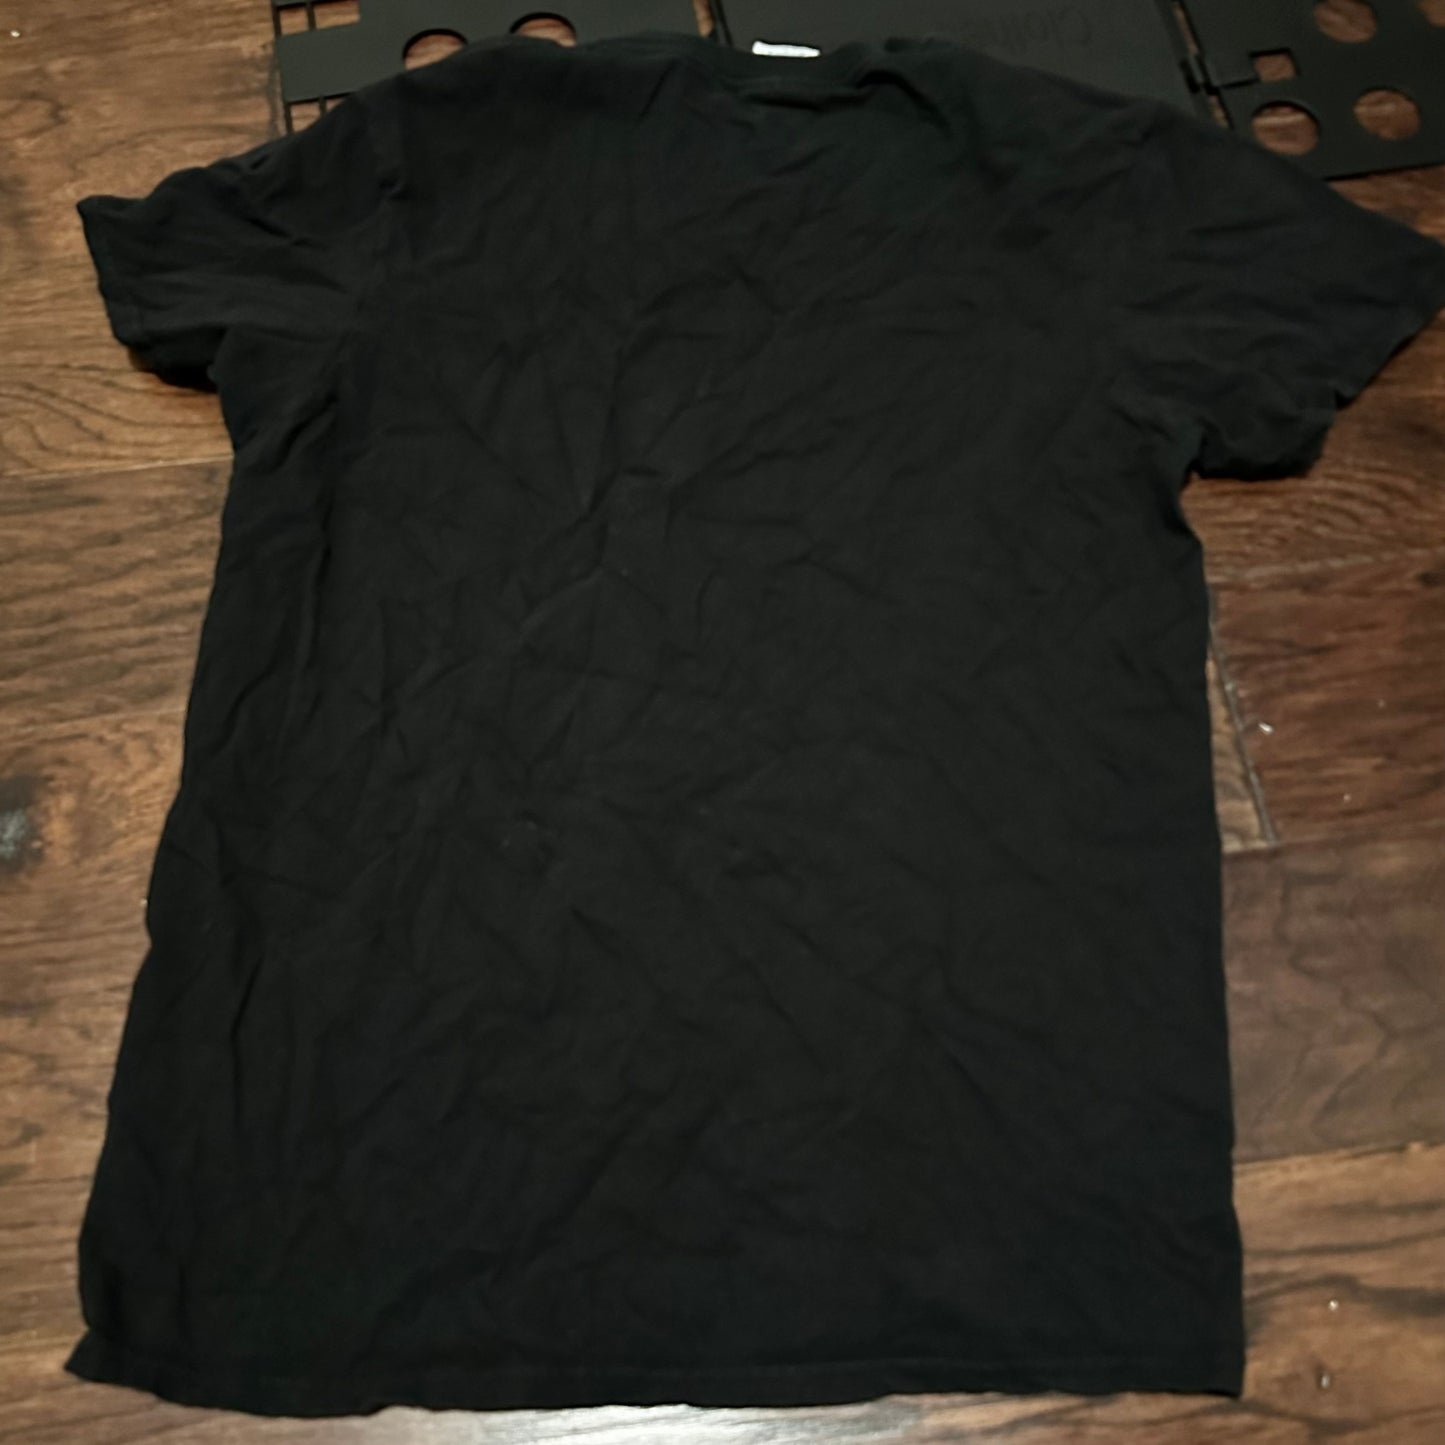 Cowboys Black T-Shirt - Small